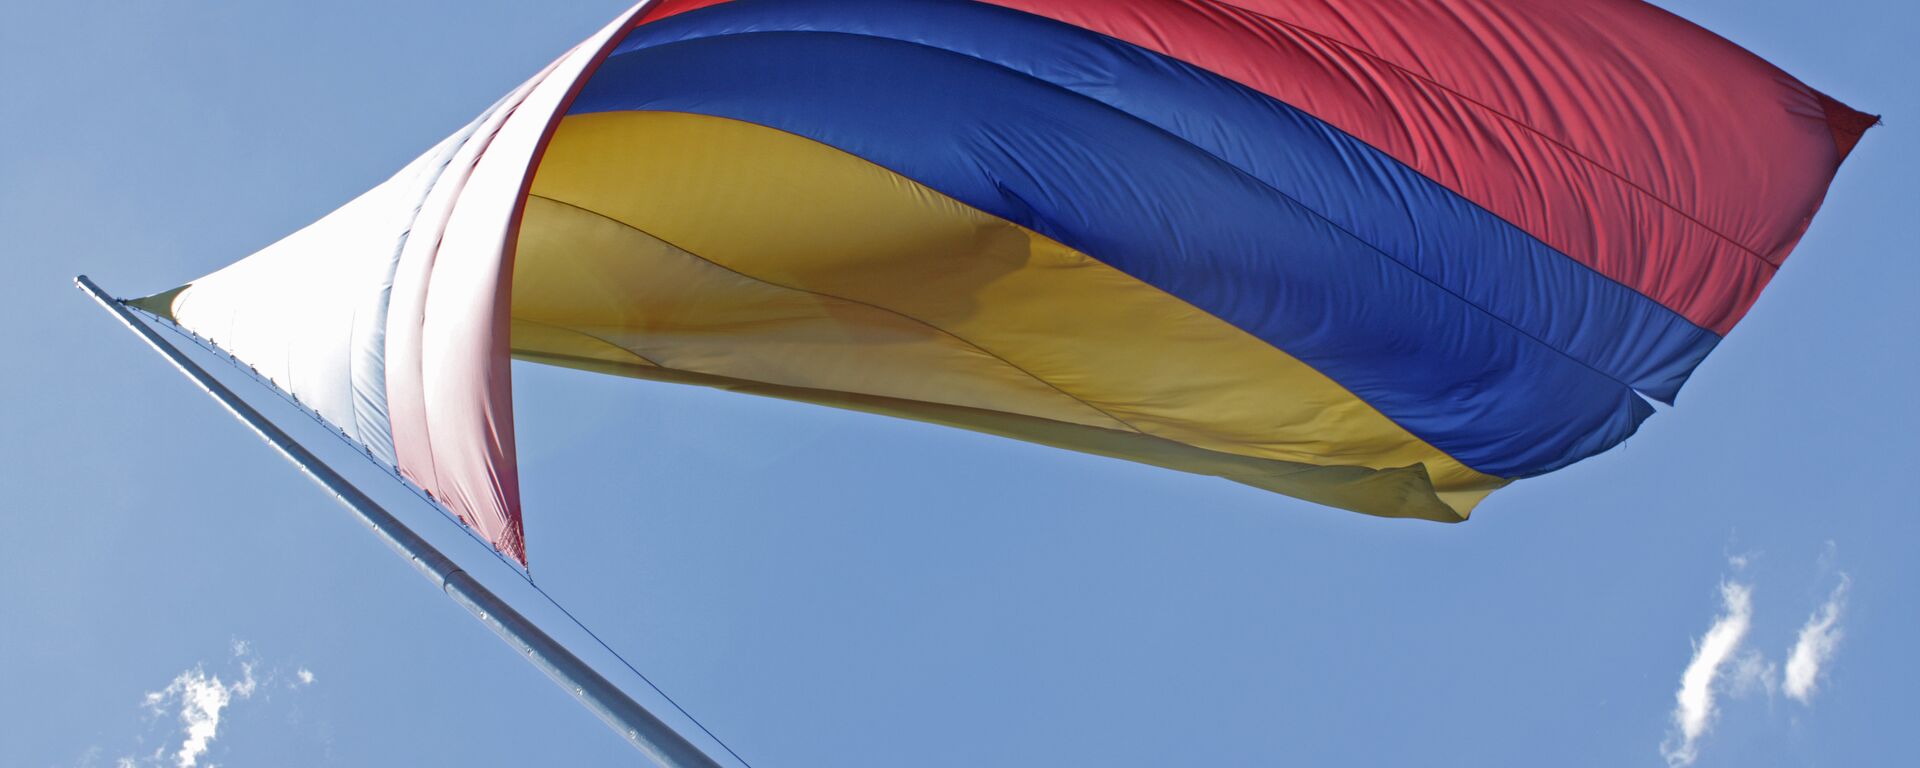 Bandera de Colombia - Sputnik Mundo, 1920, 18.04.2021